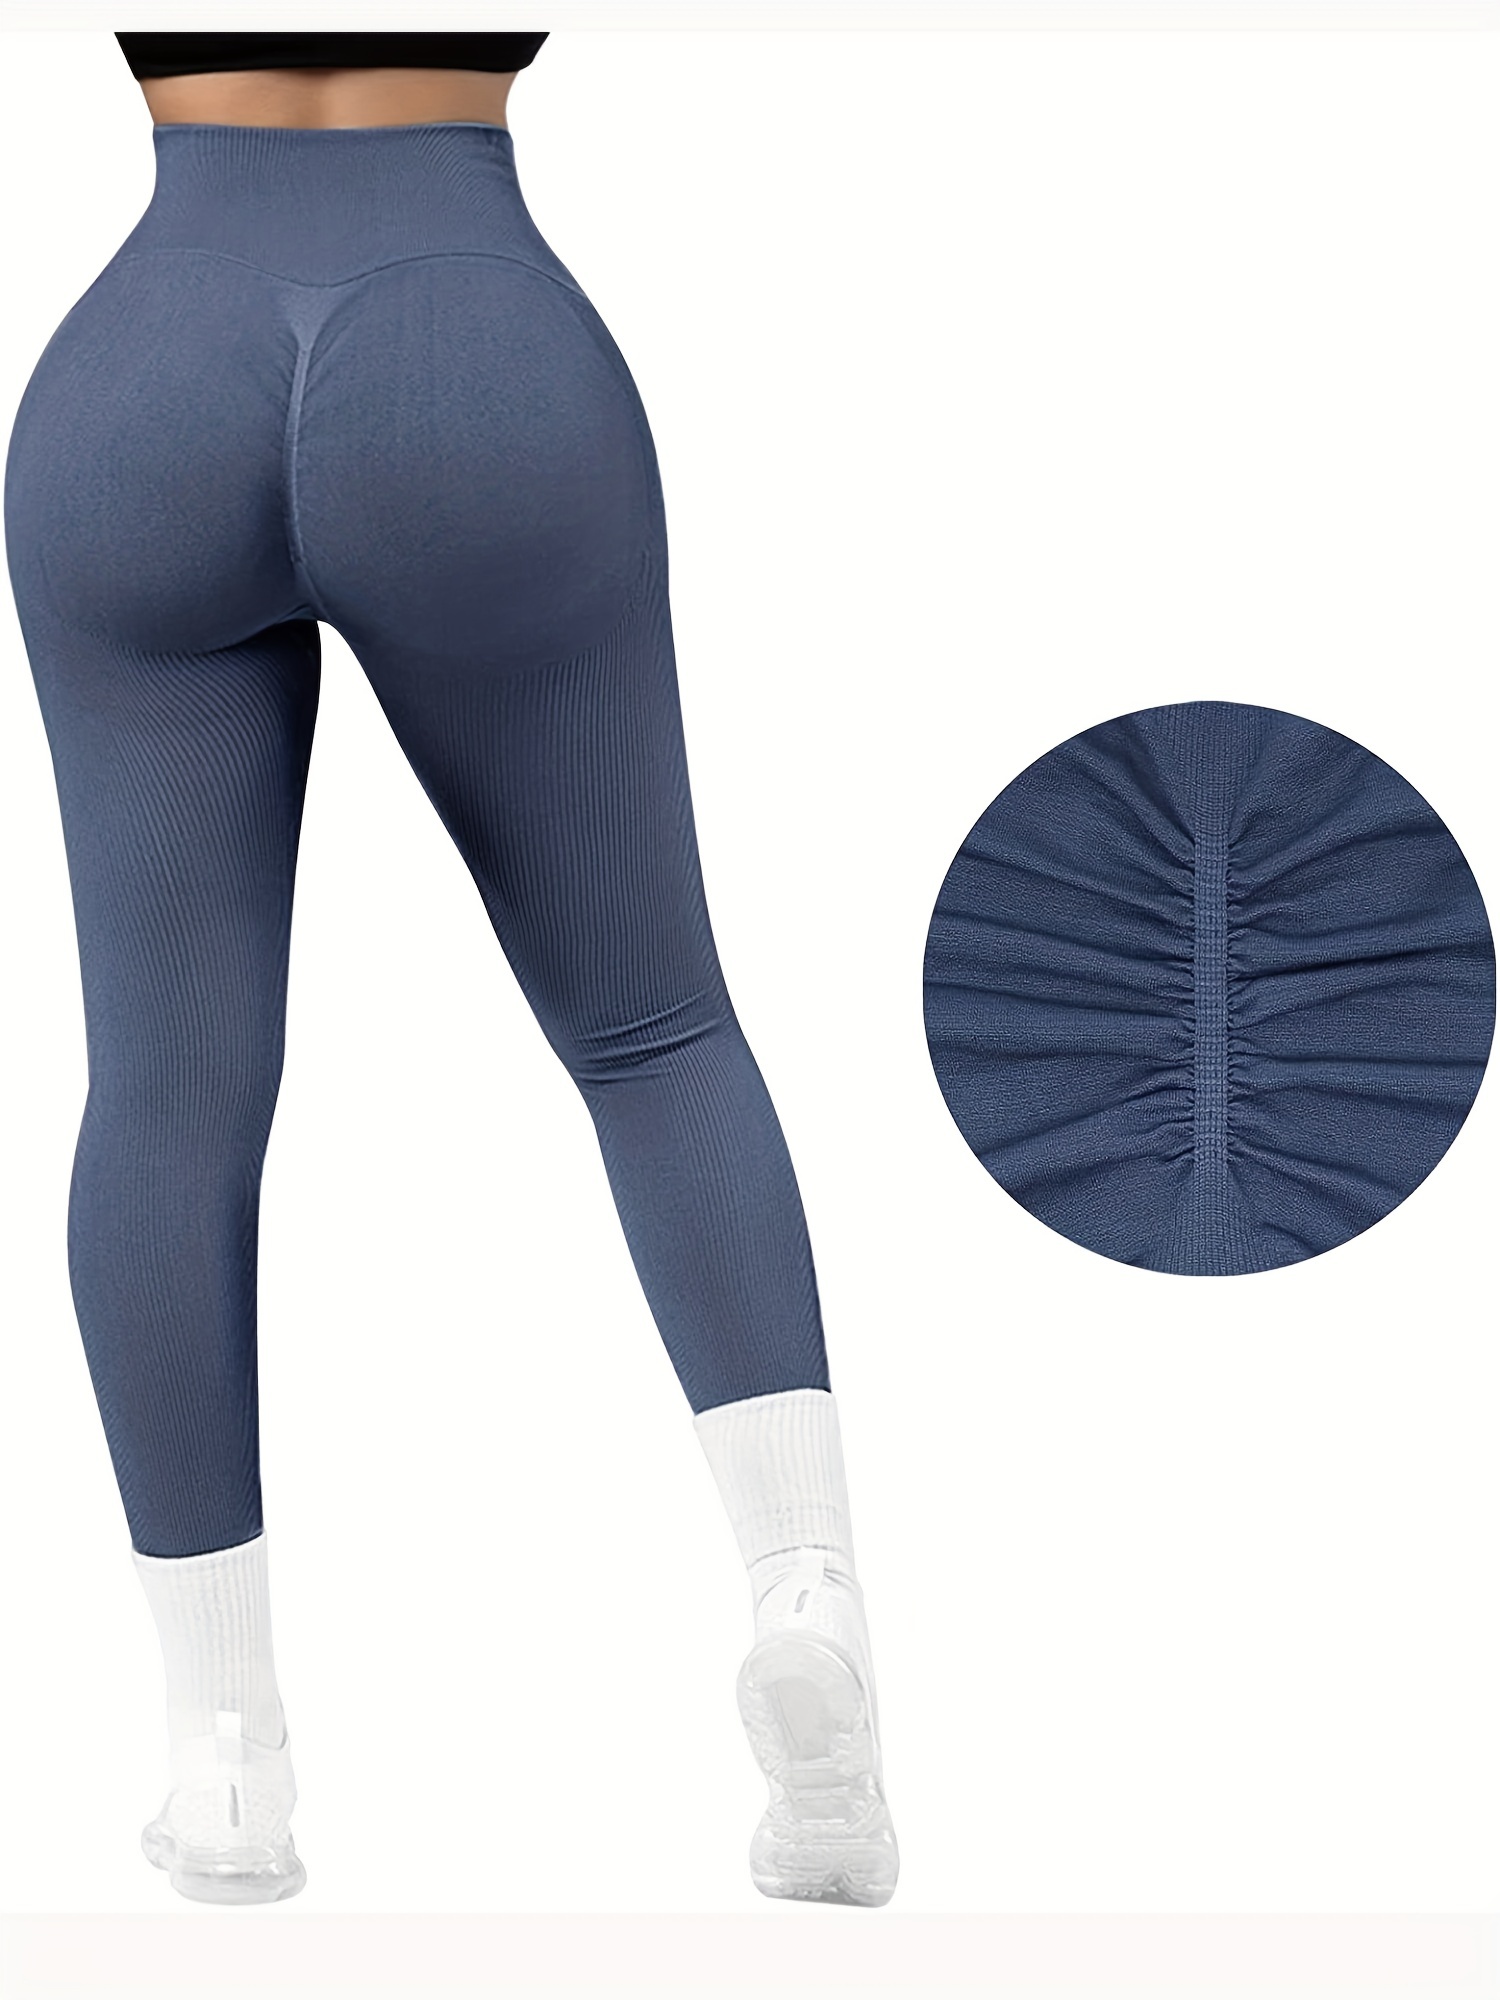 3pcs Rib-Knit Workout Running Tights Athletic Pants, High Stretch Yoga Butt  Lifting Yoga Leggings, Women's Activewear